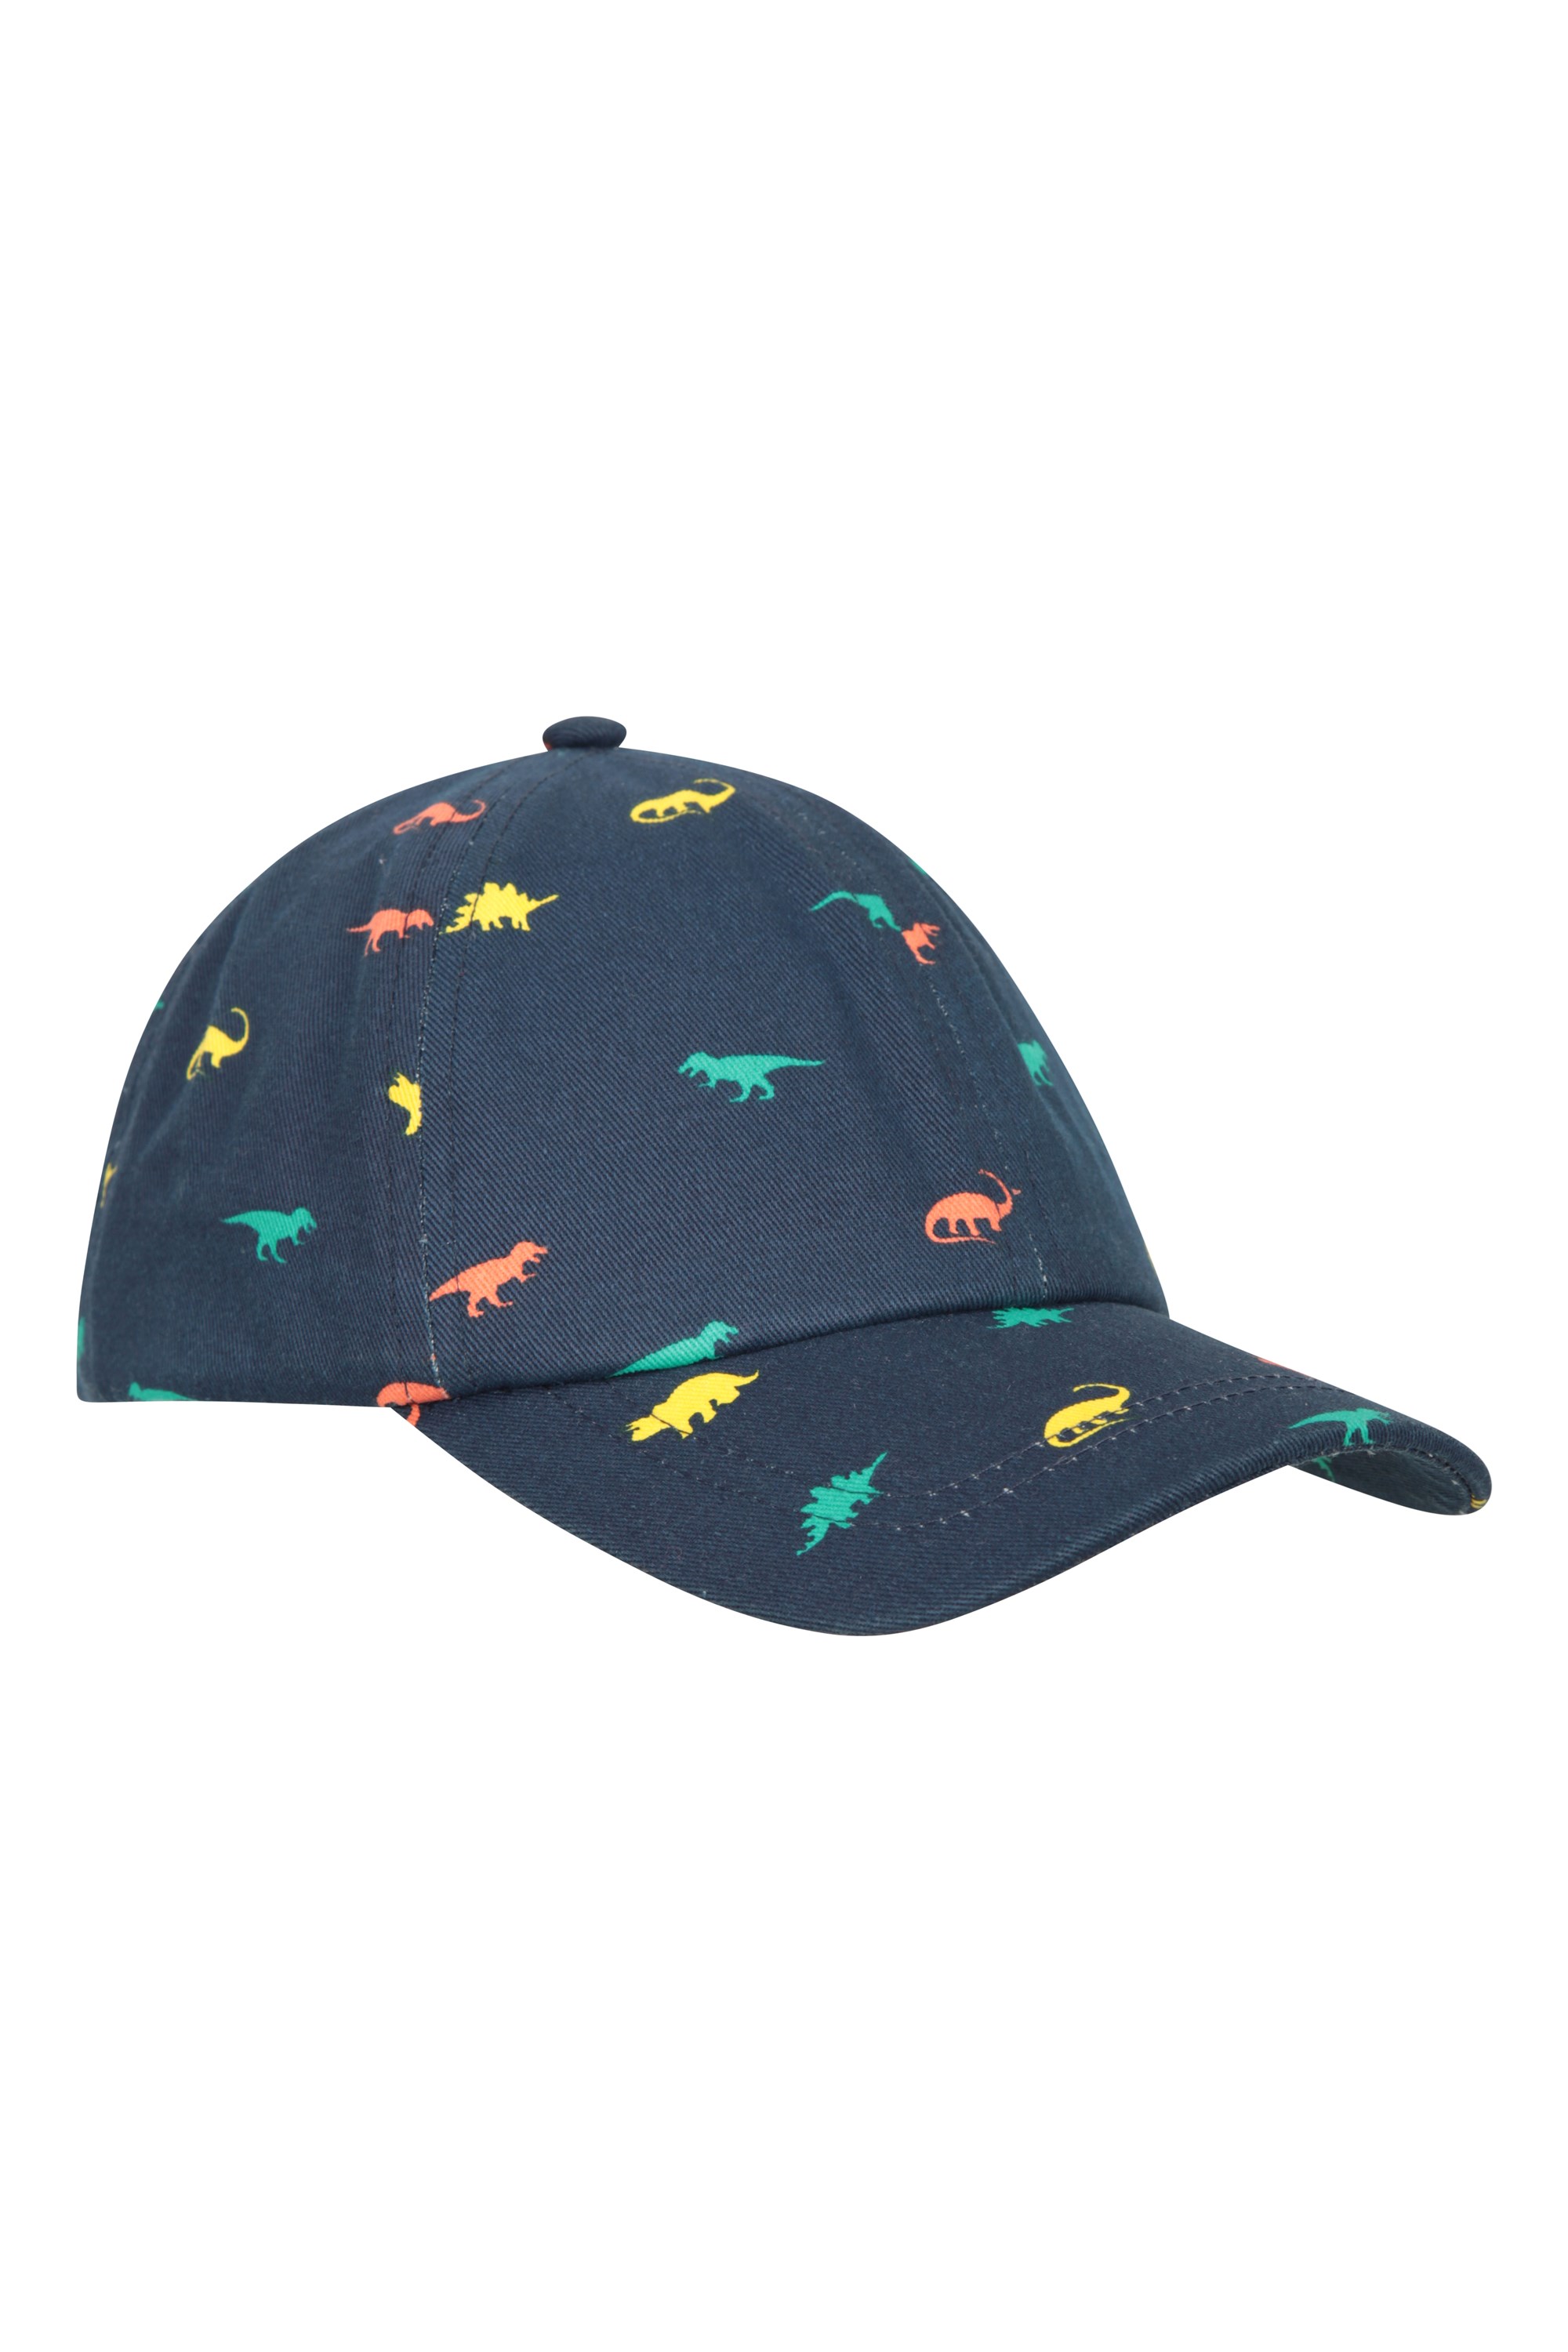 Ehqjnj Fishing Hat for Kids 8-12 Boys Kids Adjustable Chin Strap Sun Hats Summer Spring Sun Hat Cartoon Dinosaur Embroidery Outdoor Beach Bucket Cap